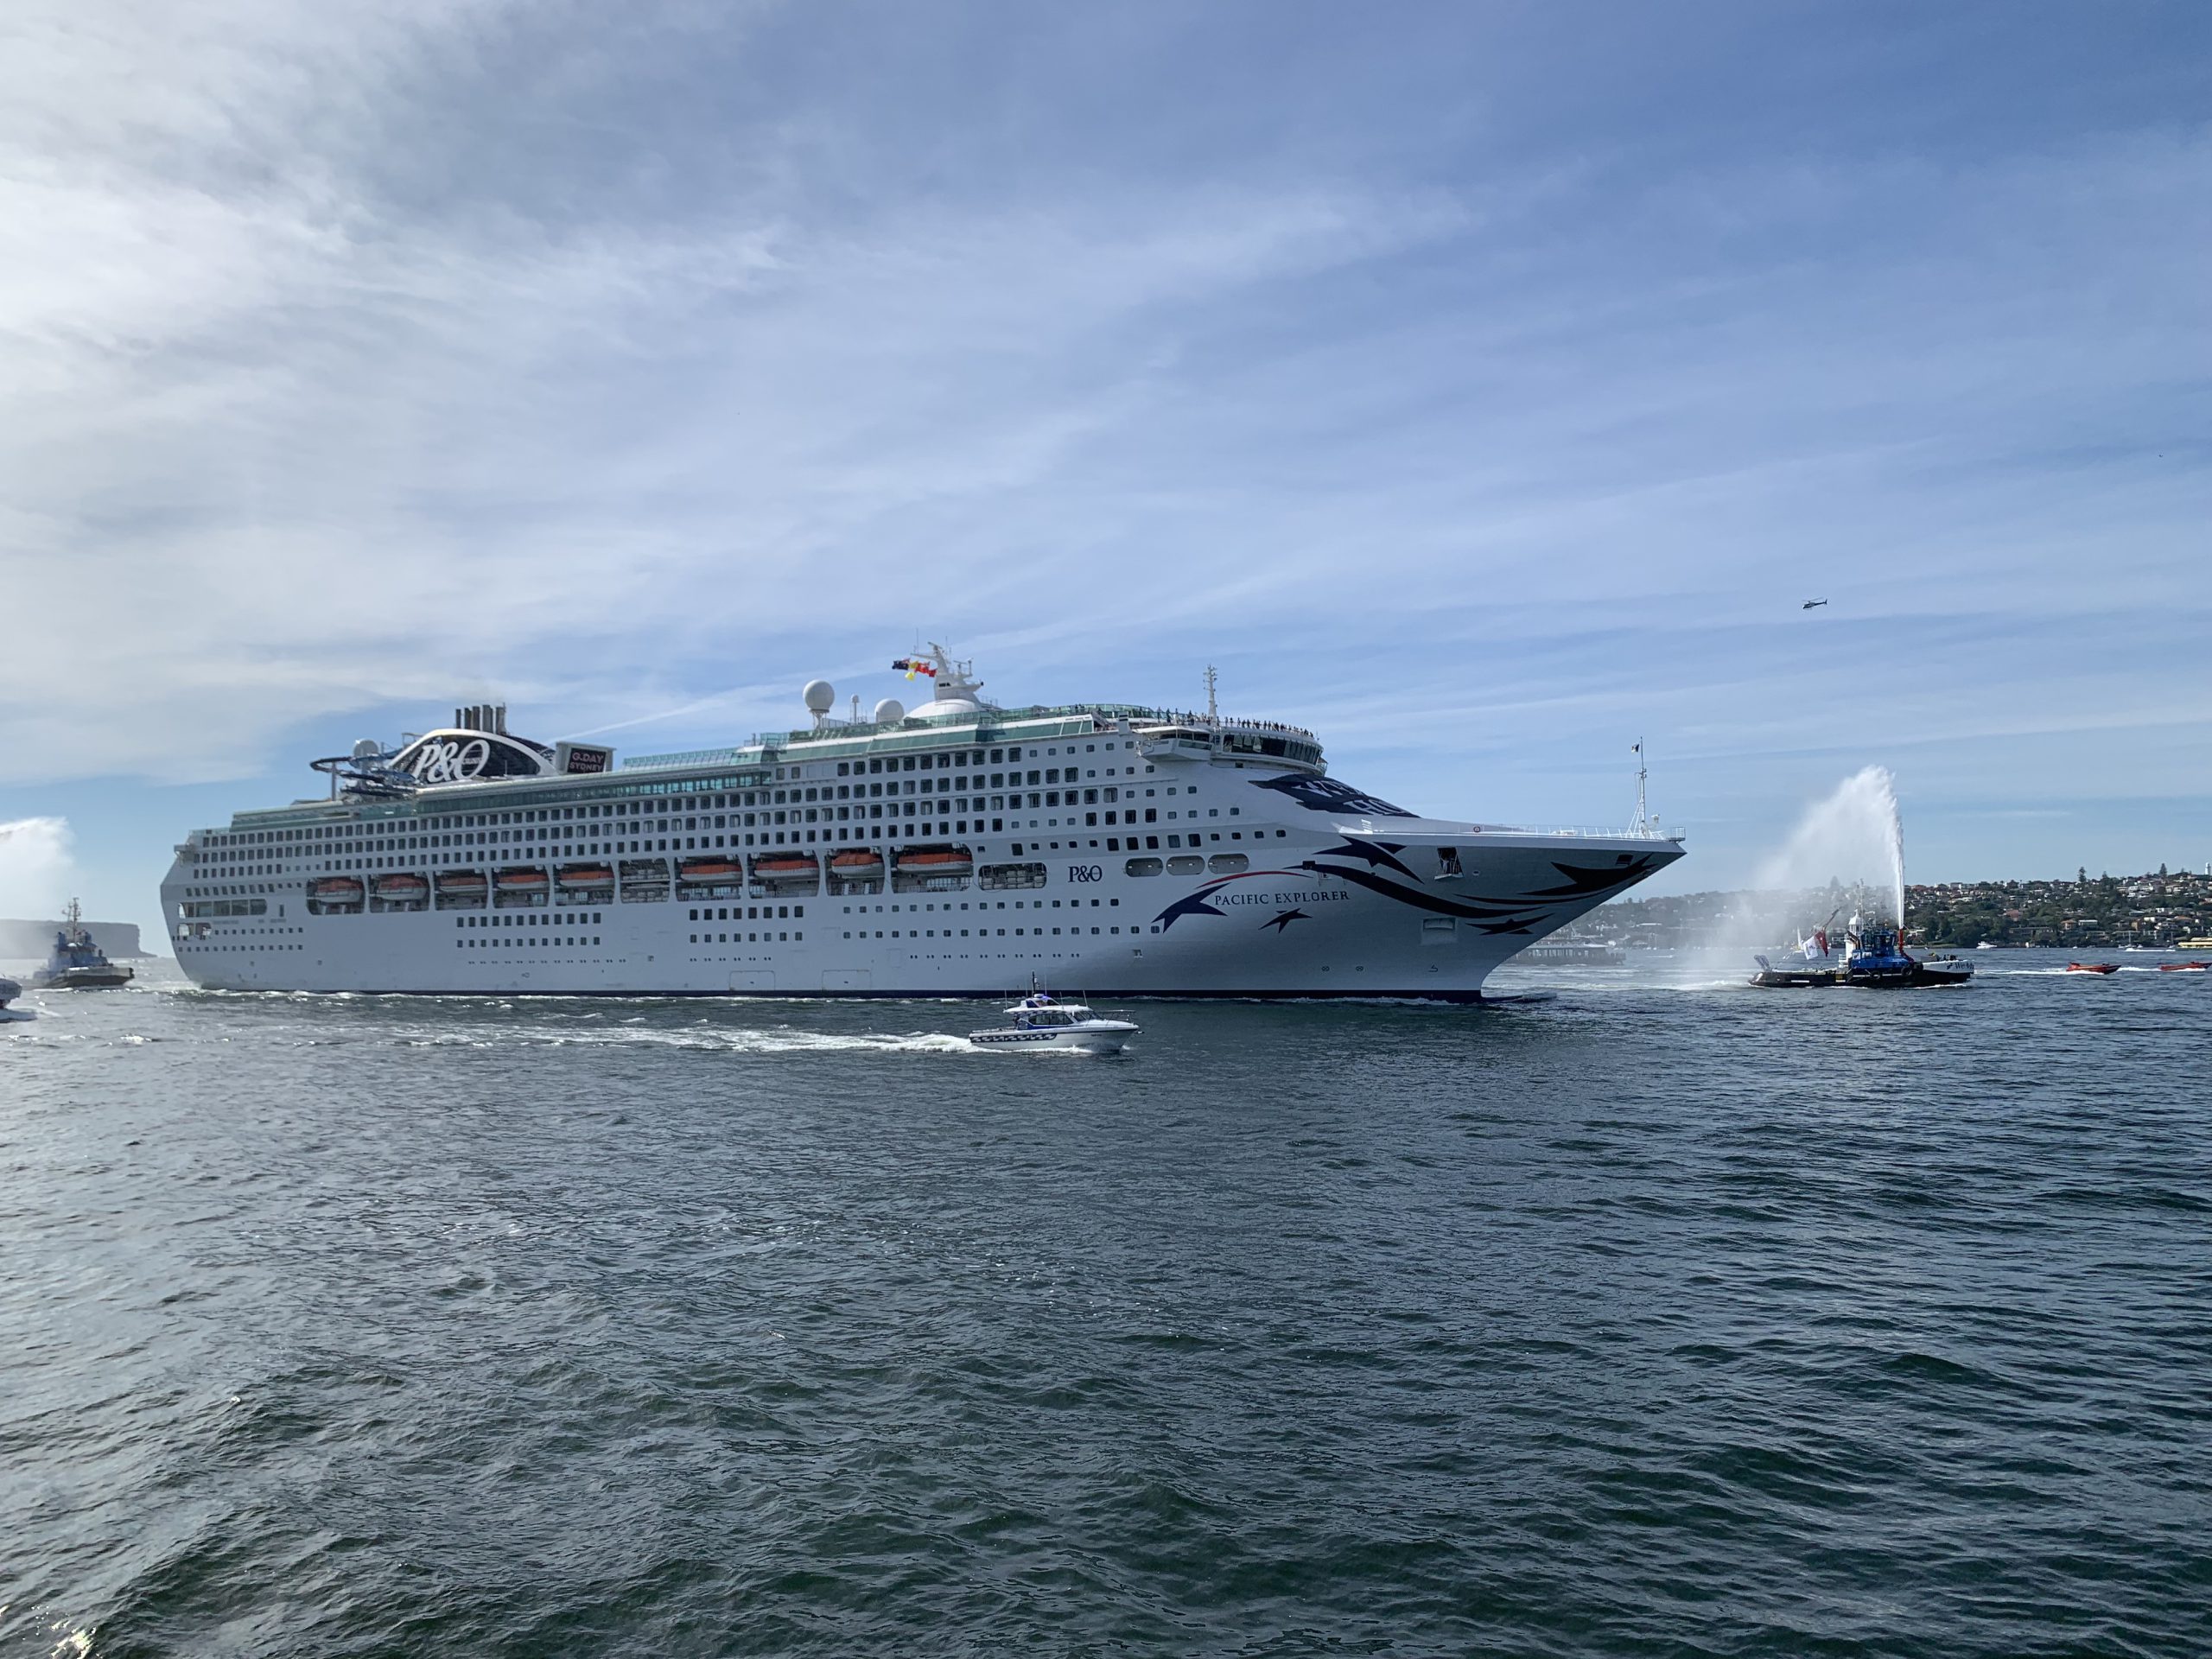 Pacific Explorer leads triumphant cruise ship return to Sydney...and Australia